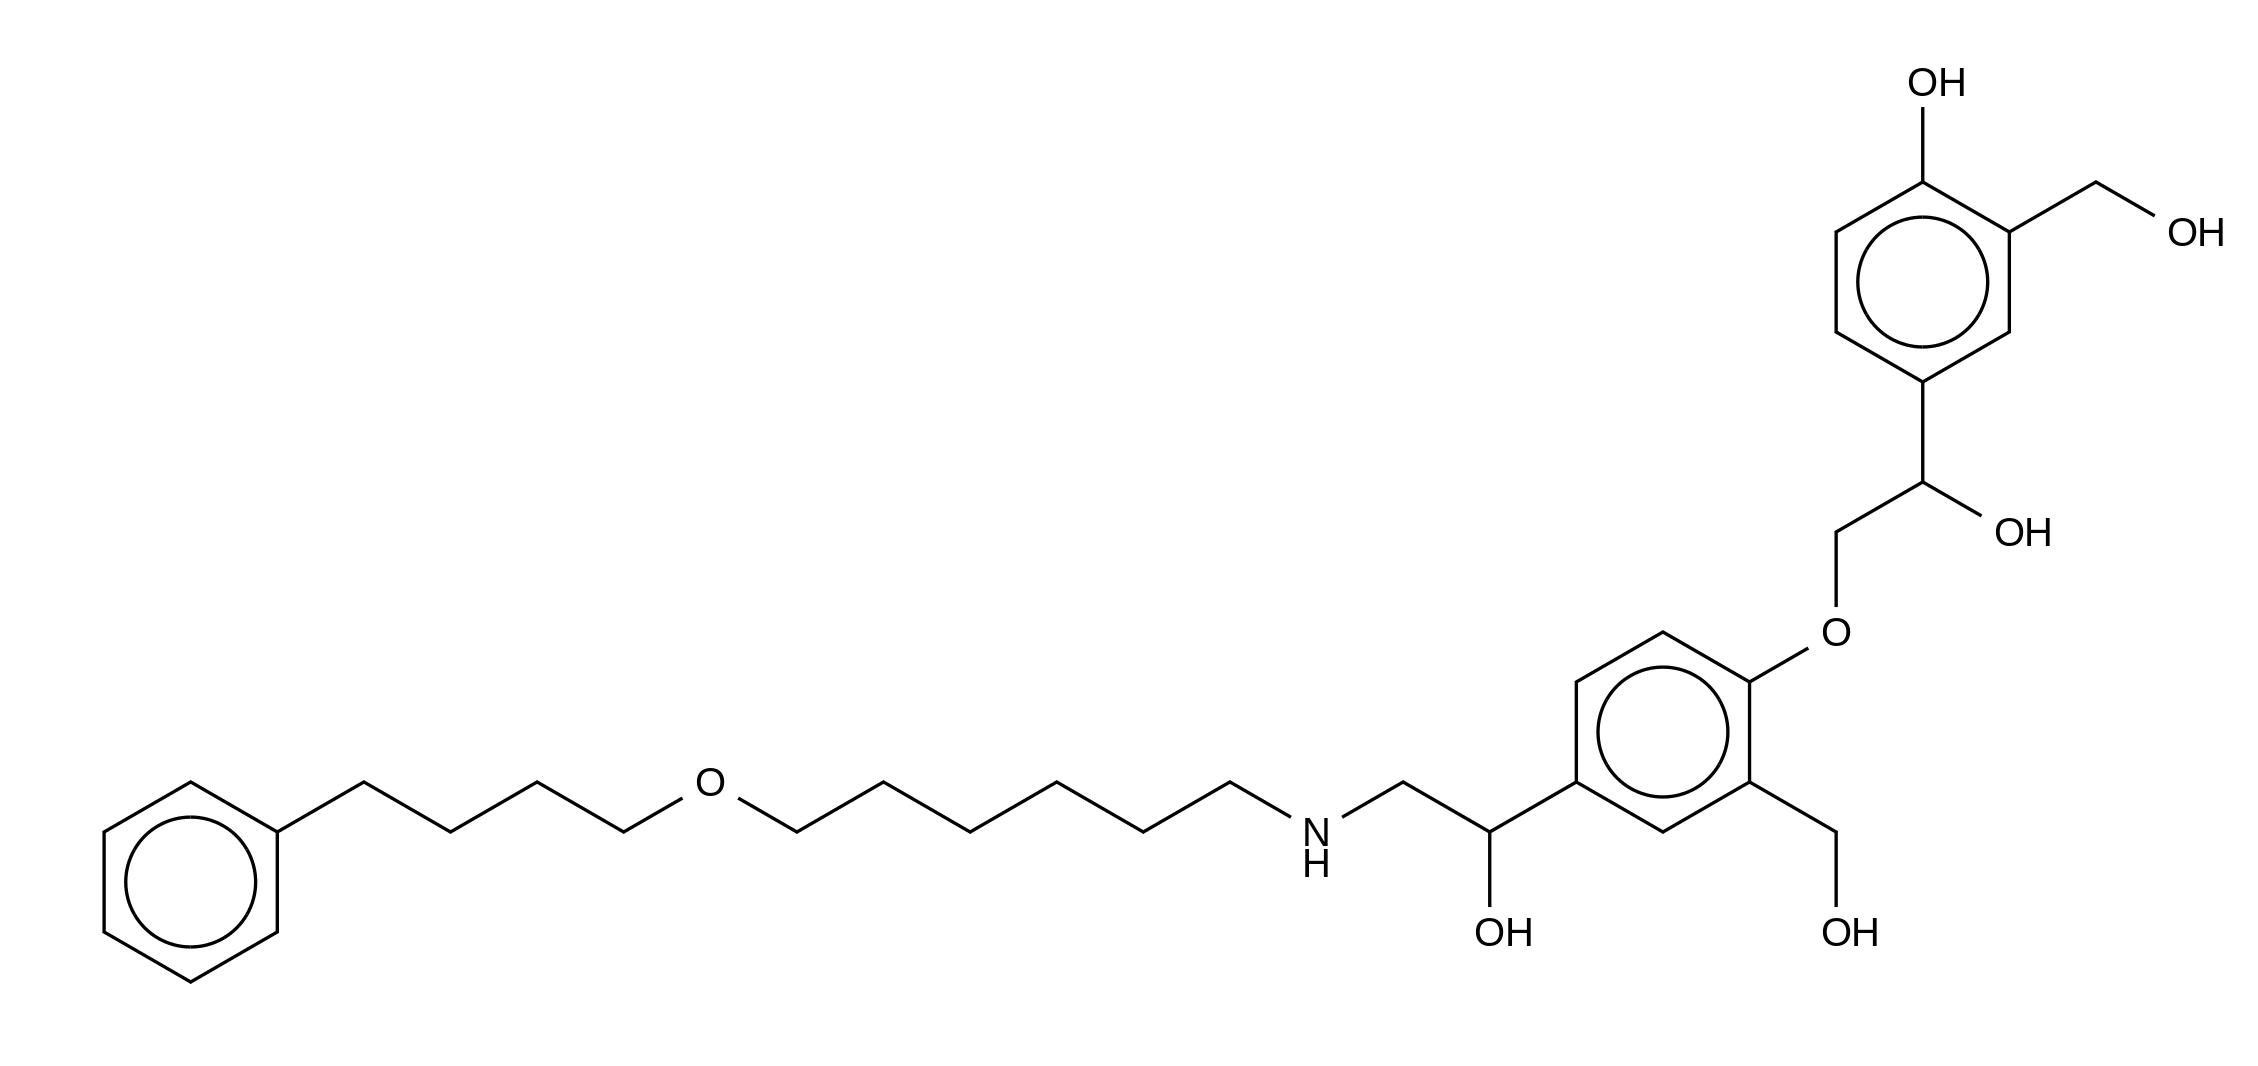 4-O-[2-Hydroxy-2-[4-hydroxy-3-(hydroxymethyl)phenyl]ethyl] Salmeterol